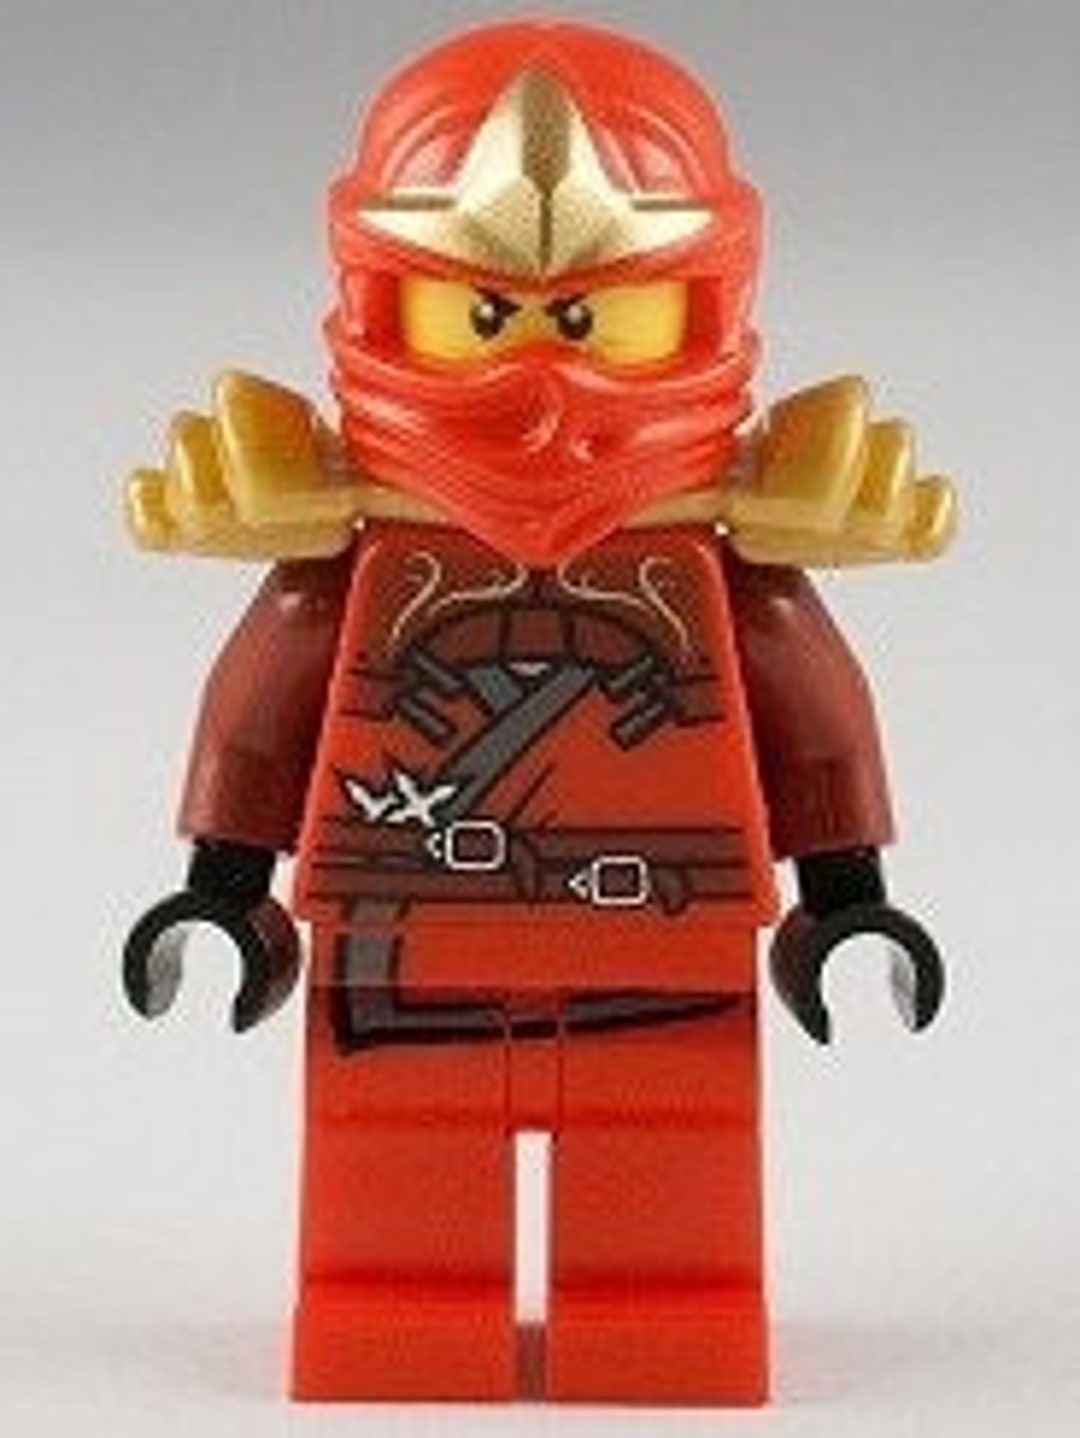 Lego MINIFIGURE Ninjago Kai ZX Shoulder Armor - Etsy